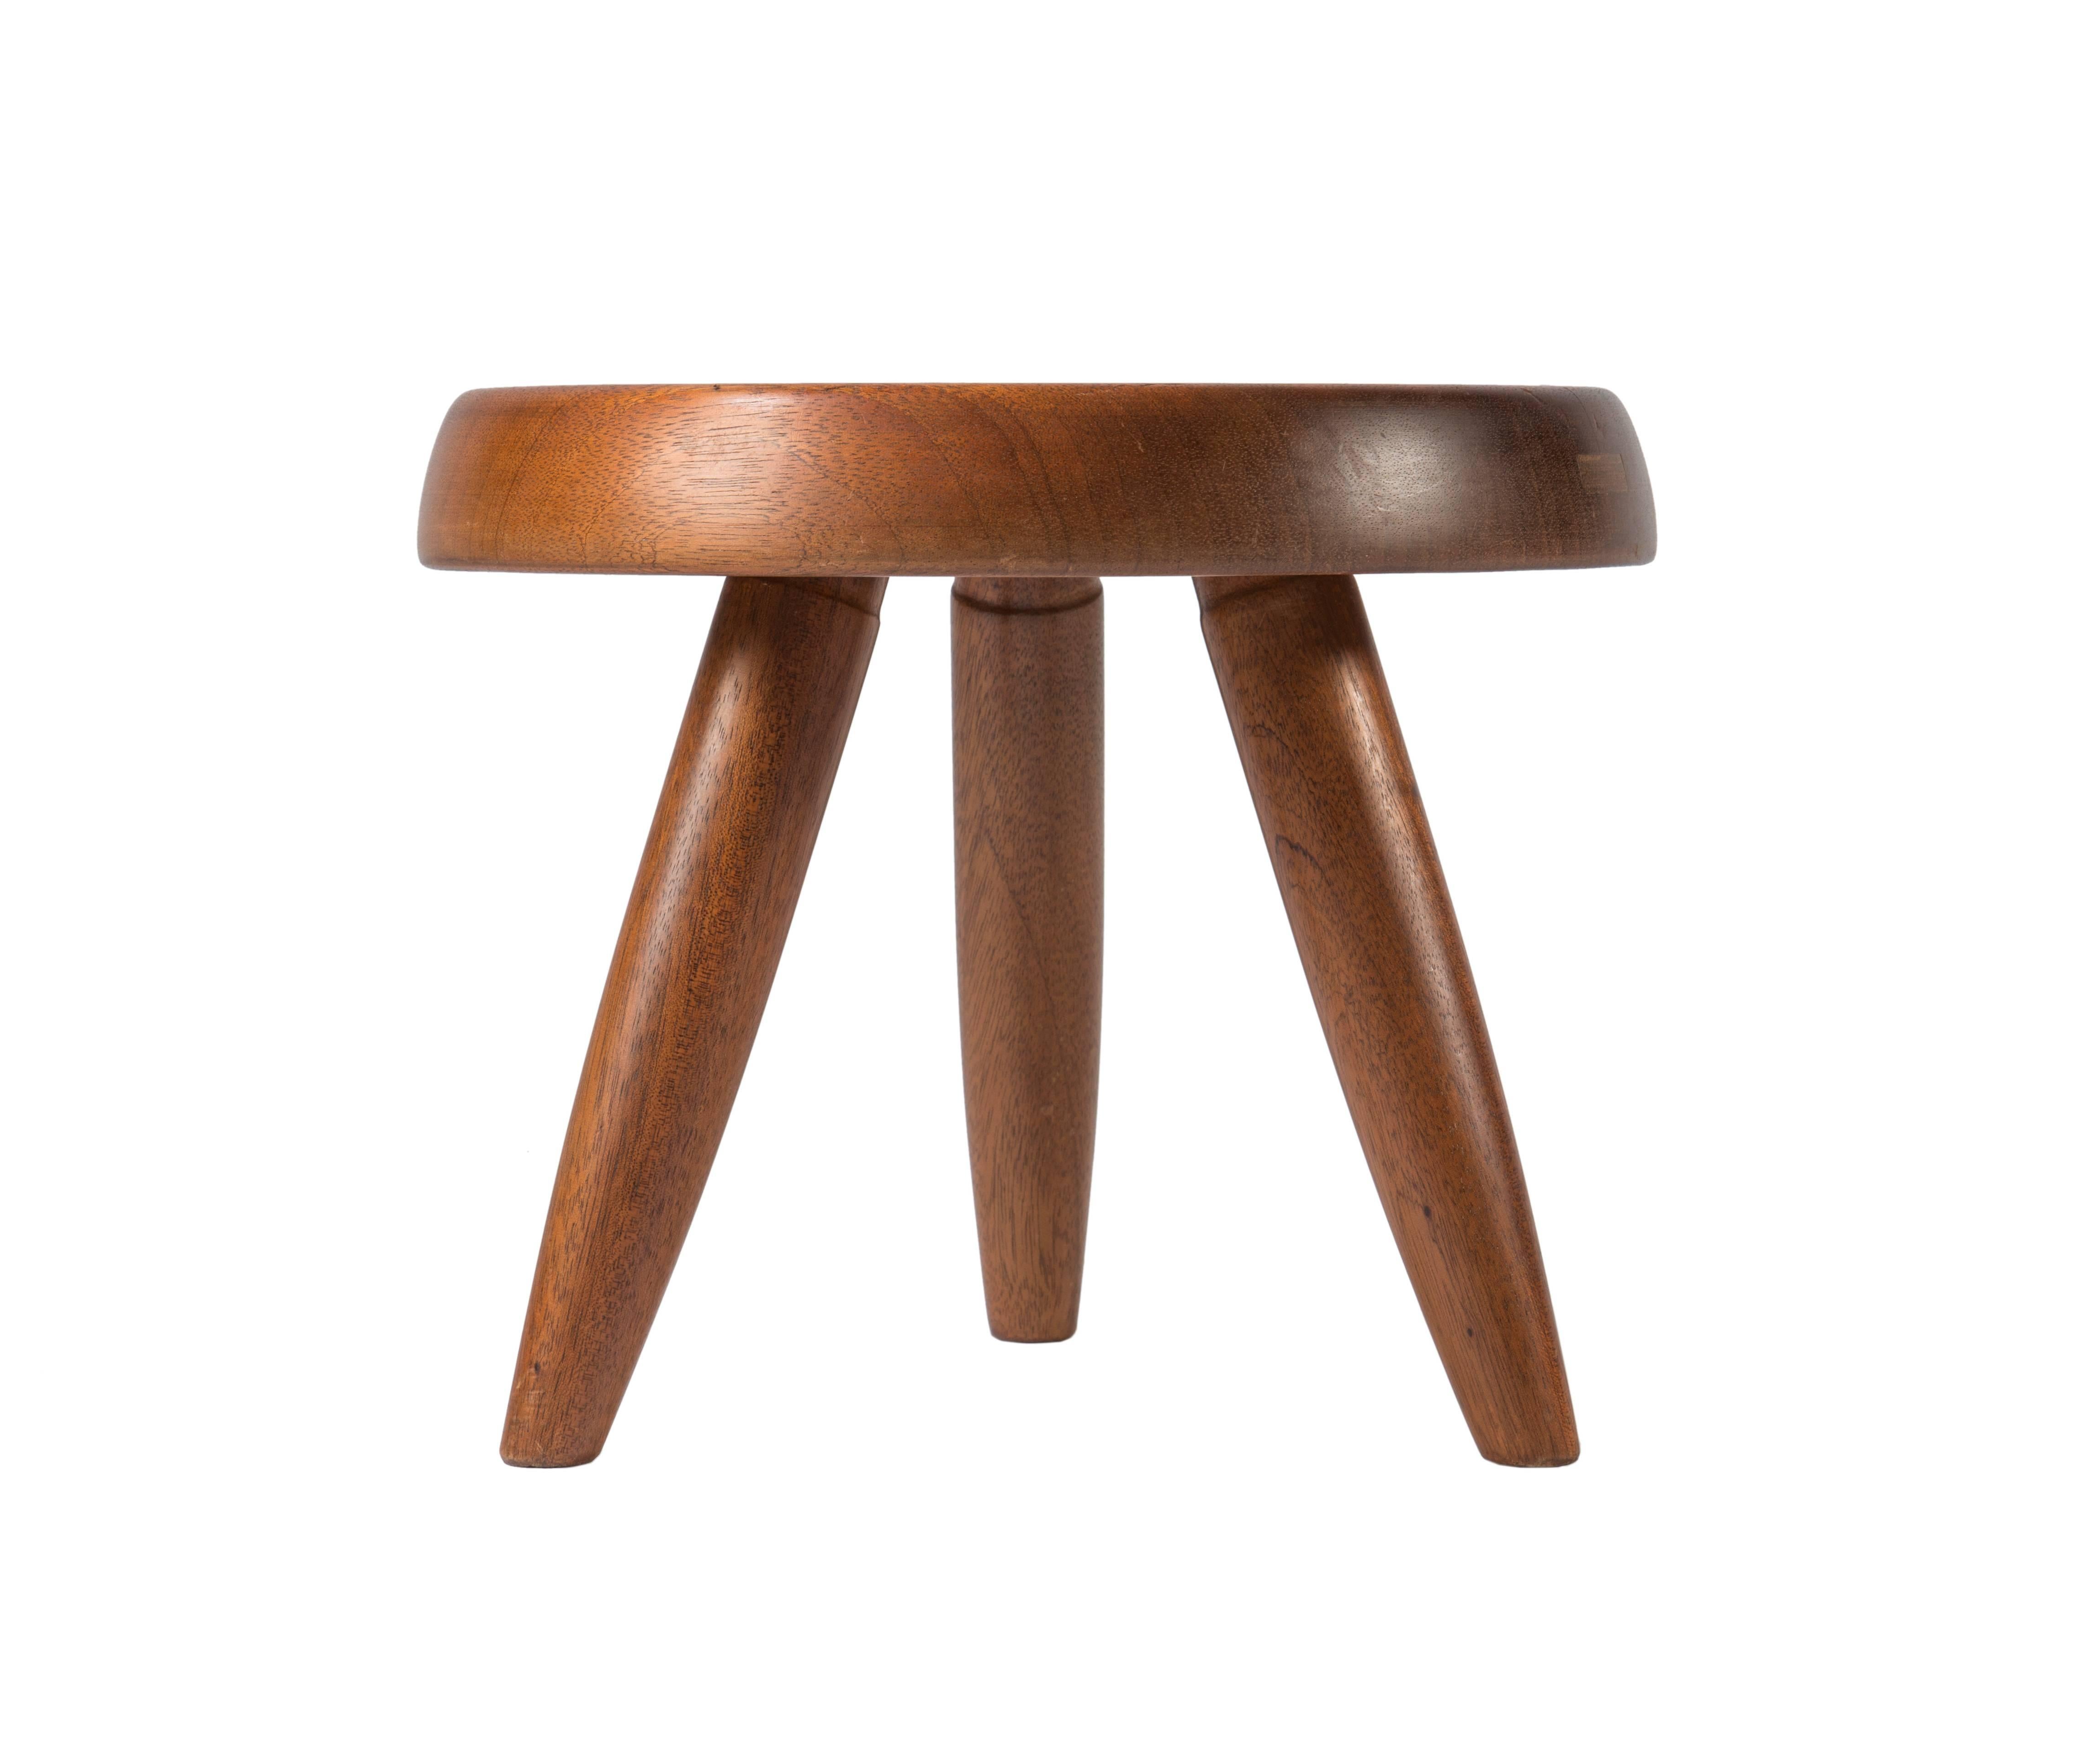 Small teak three legged stool by Perriand, circa 1960s.